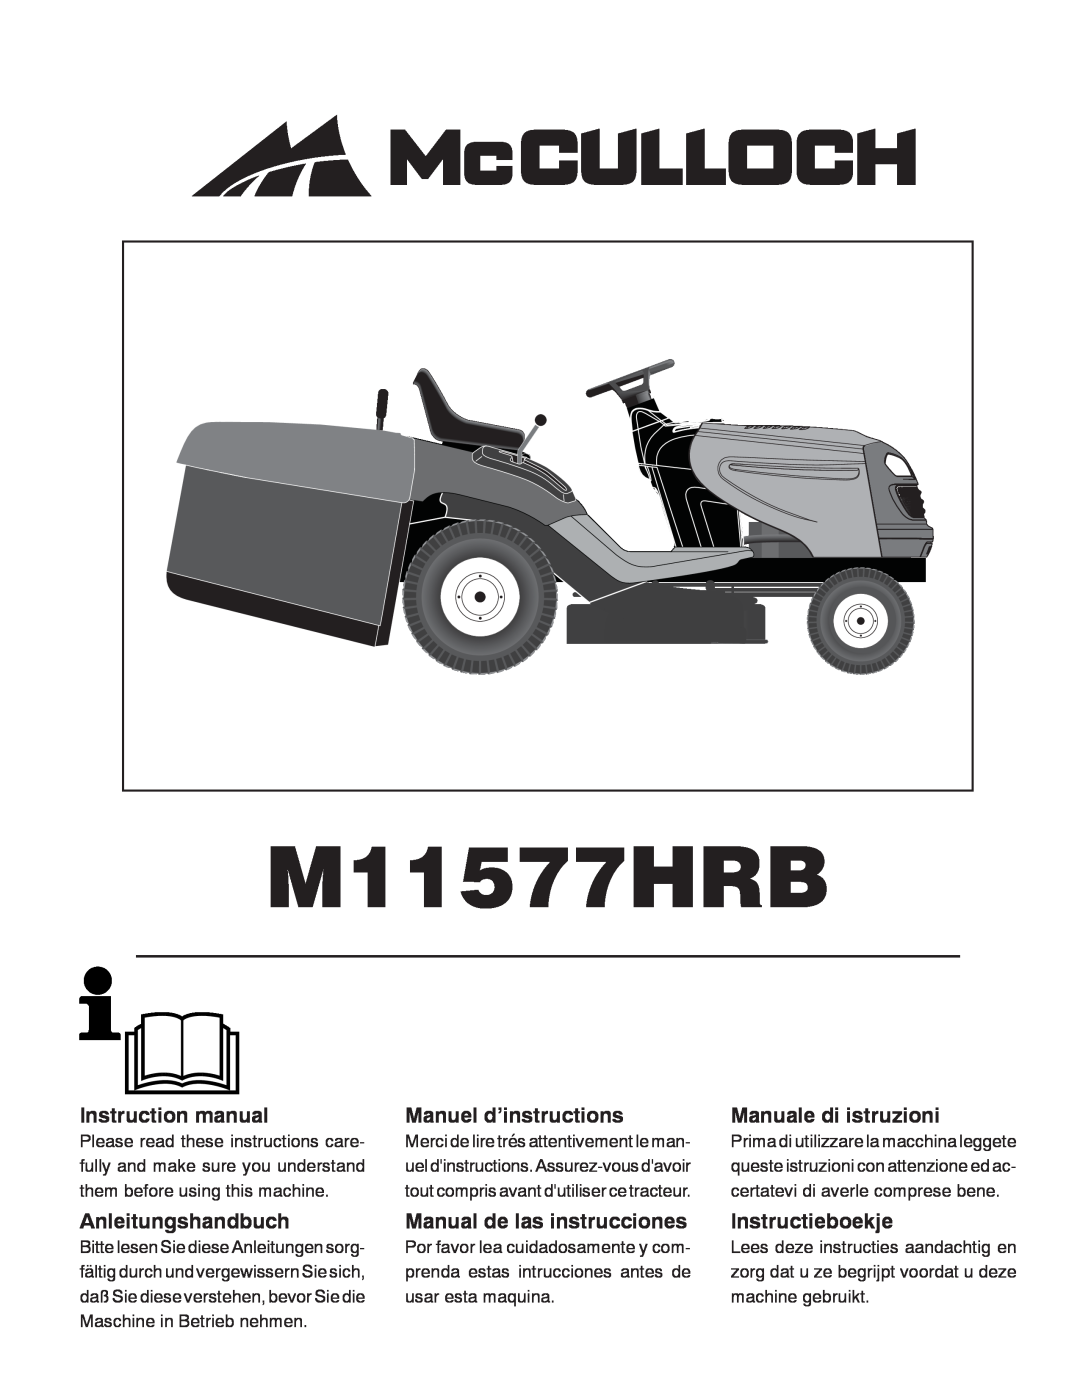 McCulloch M11577HRB instruction manual Instruction manual, Manuel d’instructions, Manuale di istruzioni, Instructieboekje 